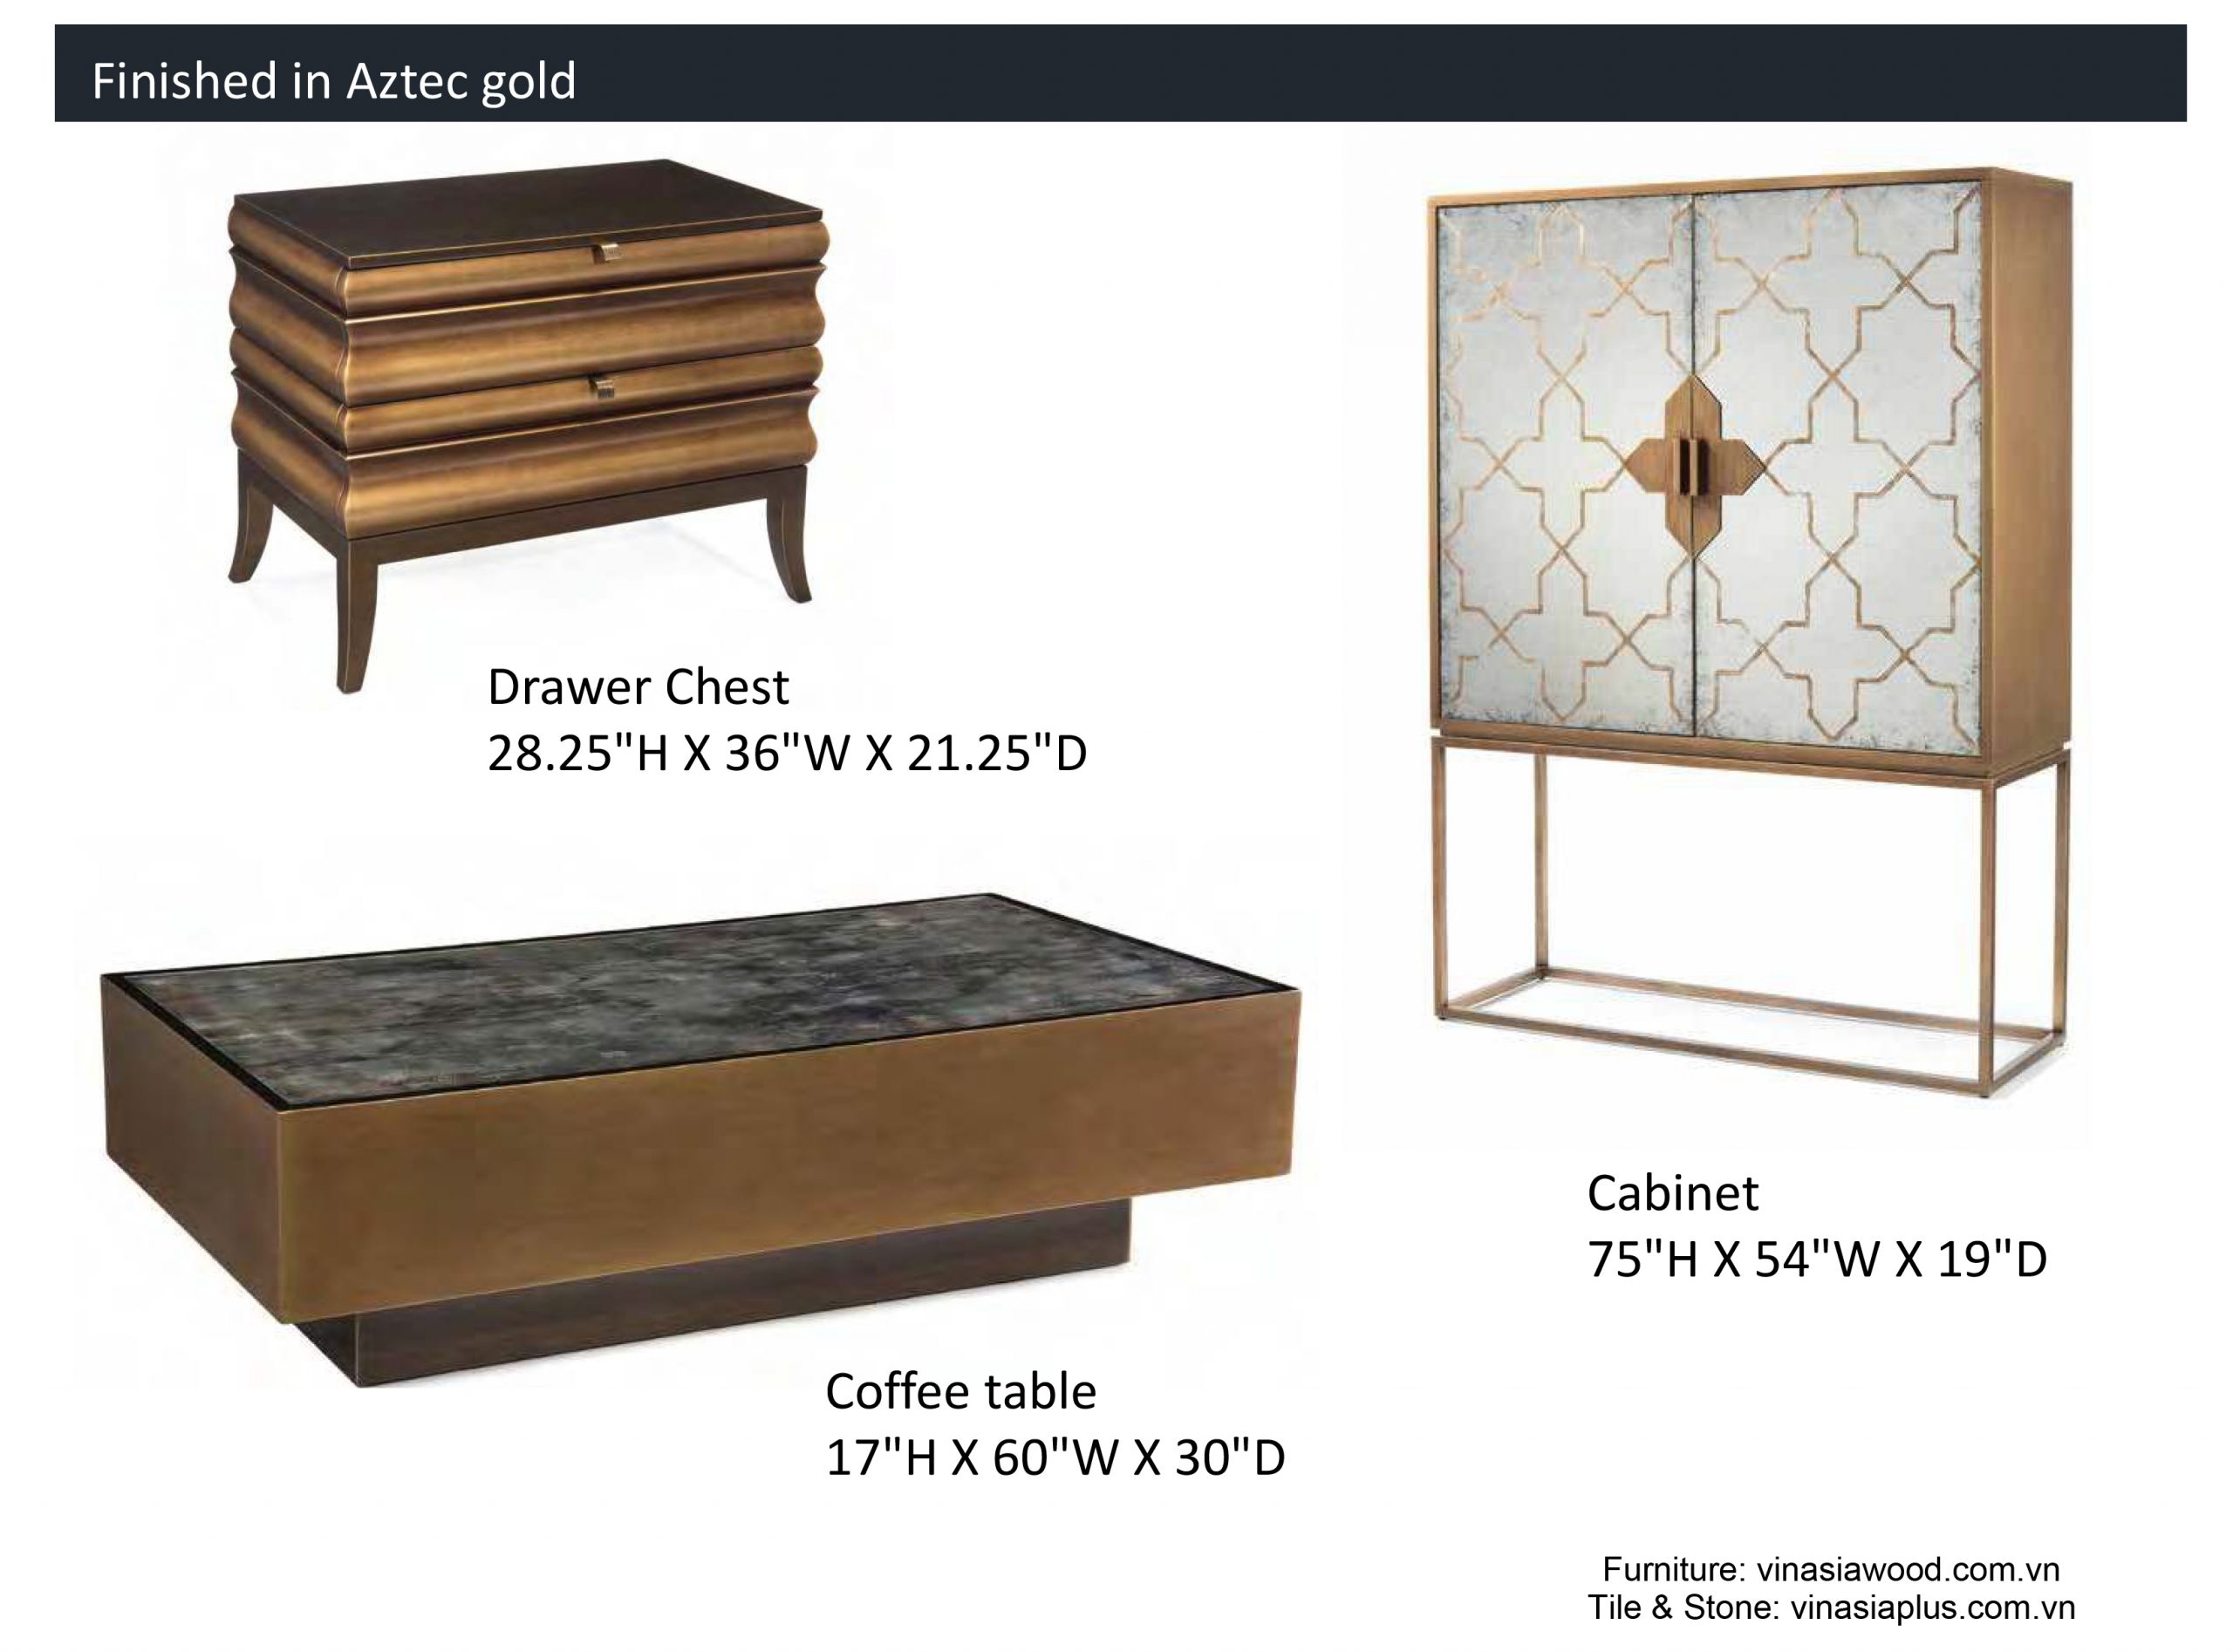 Aztec Gold - Antique styles furniture Vinasia Wood 